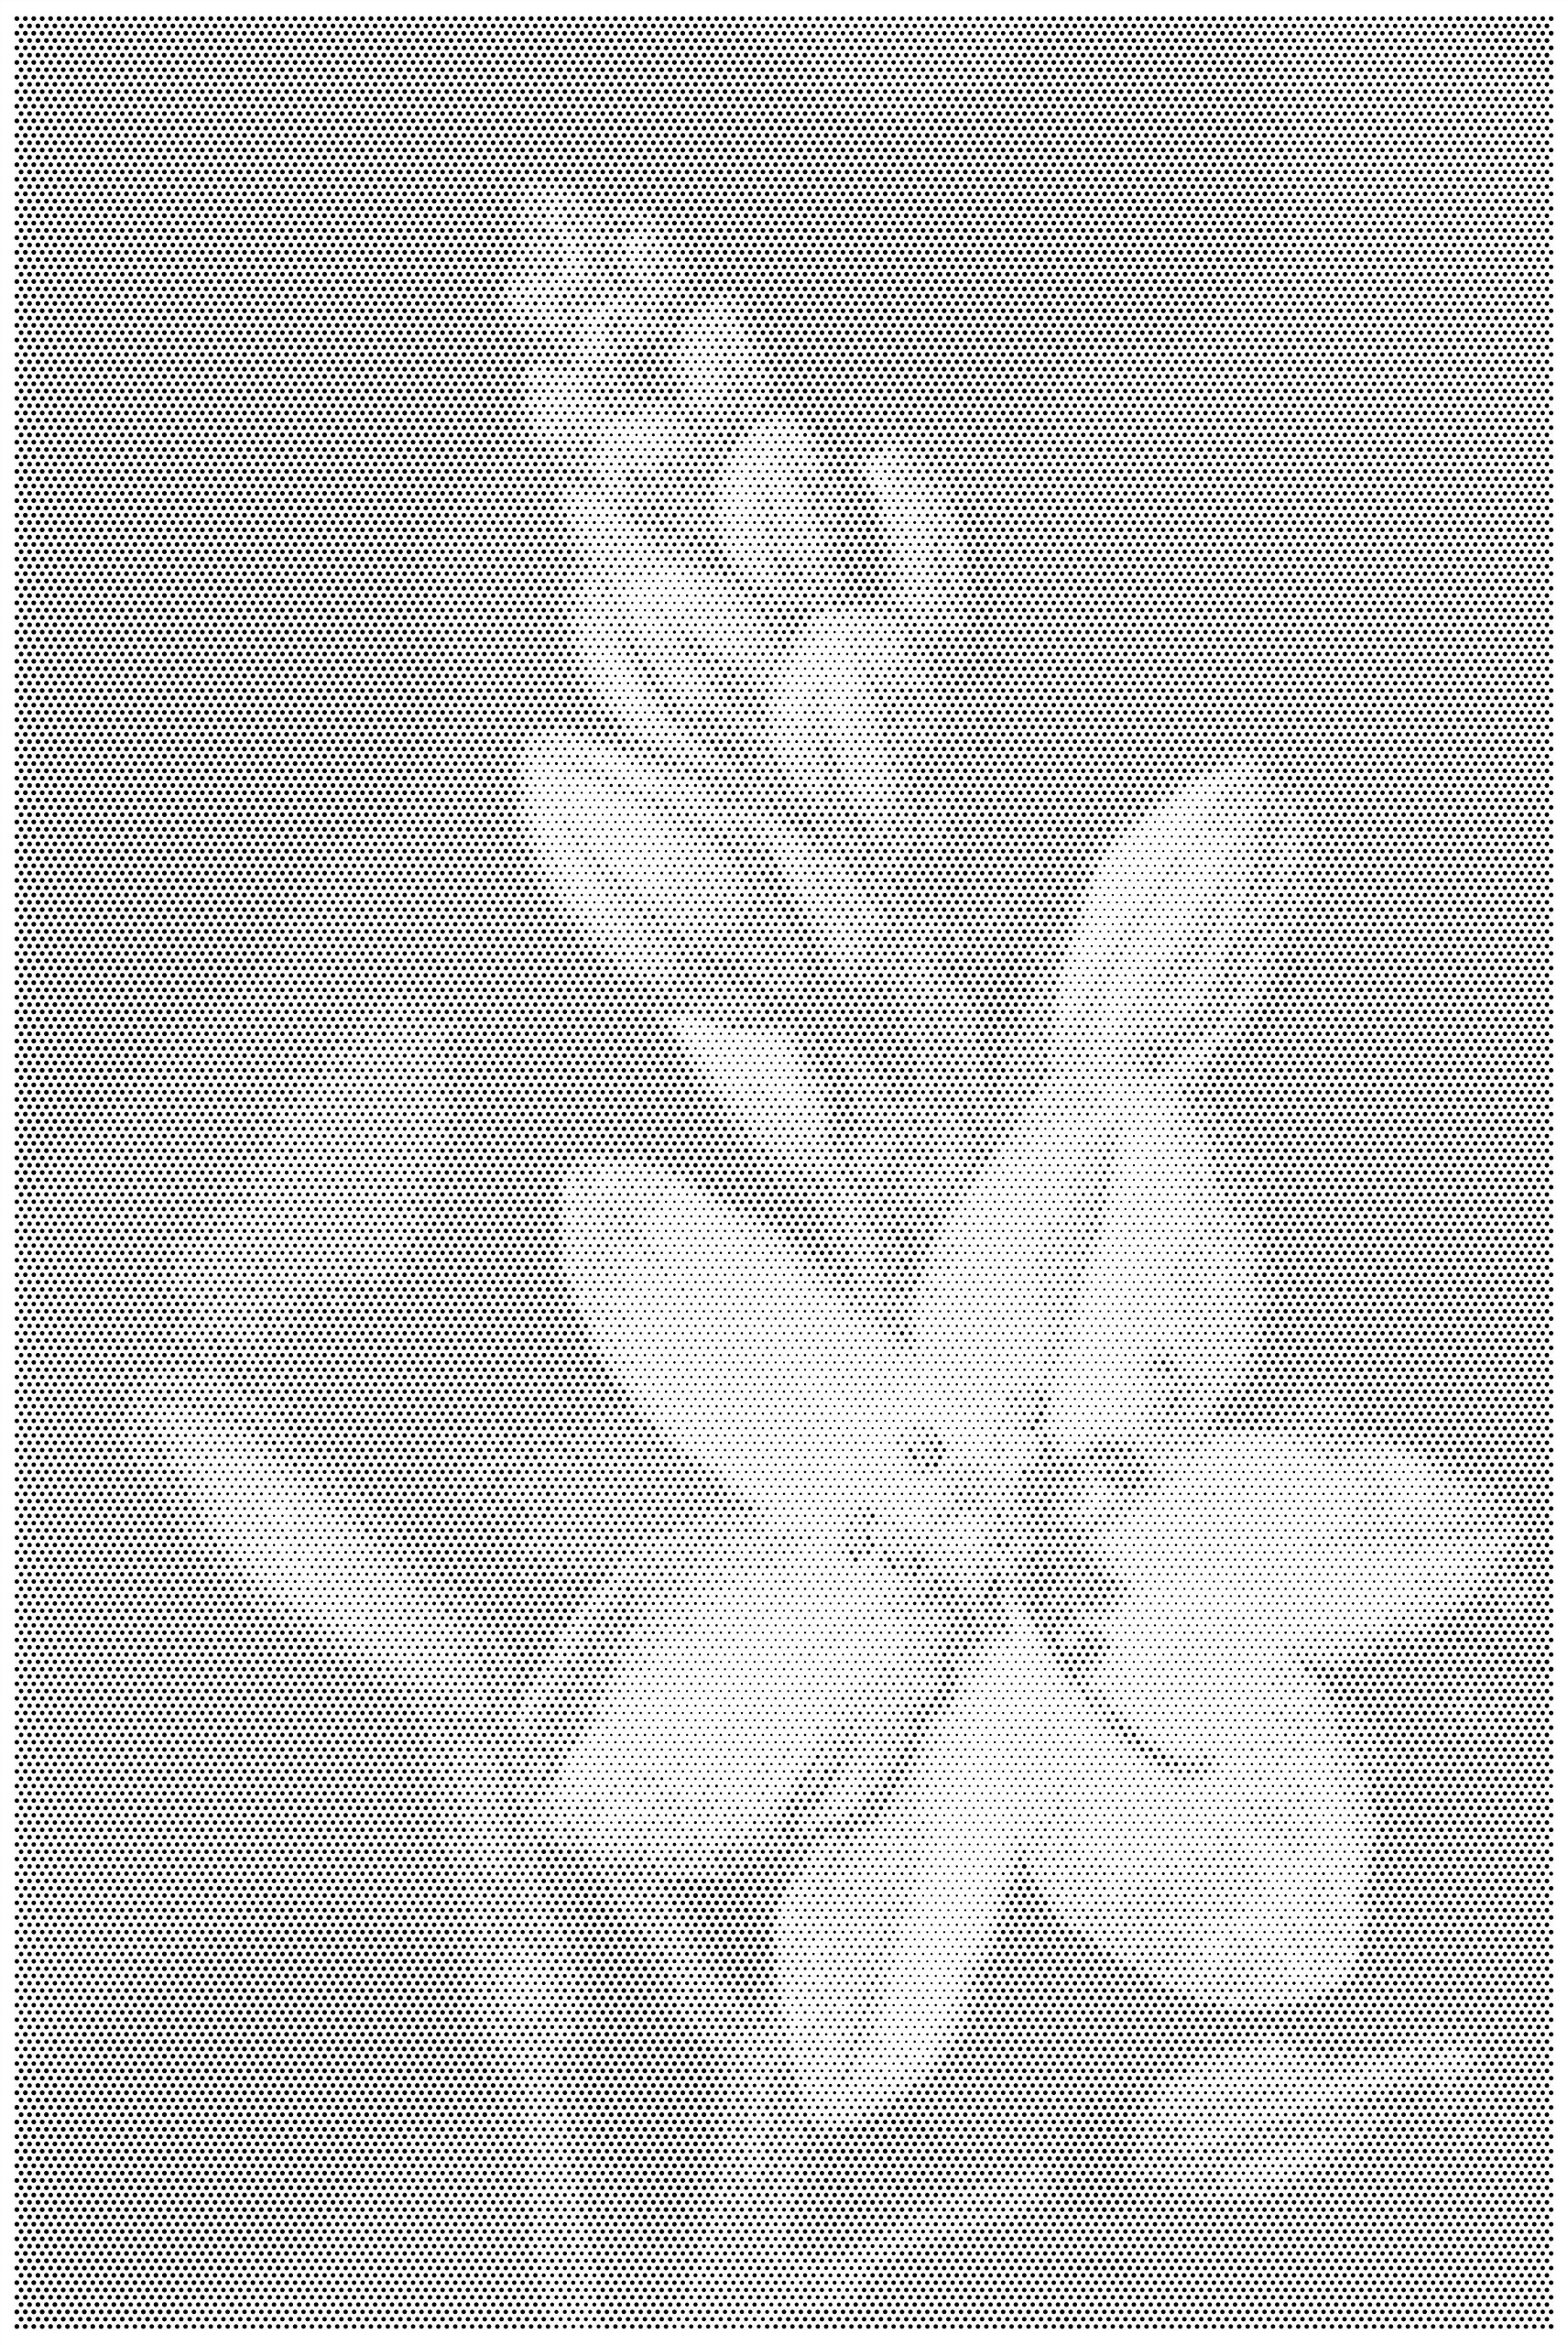 Flower 5 CNC image